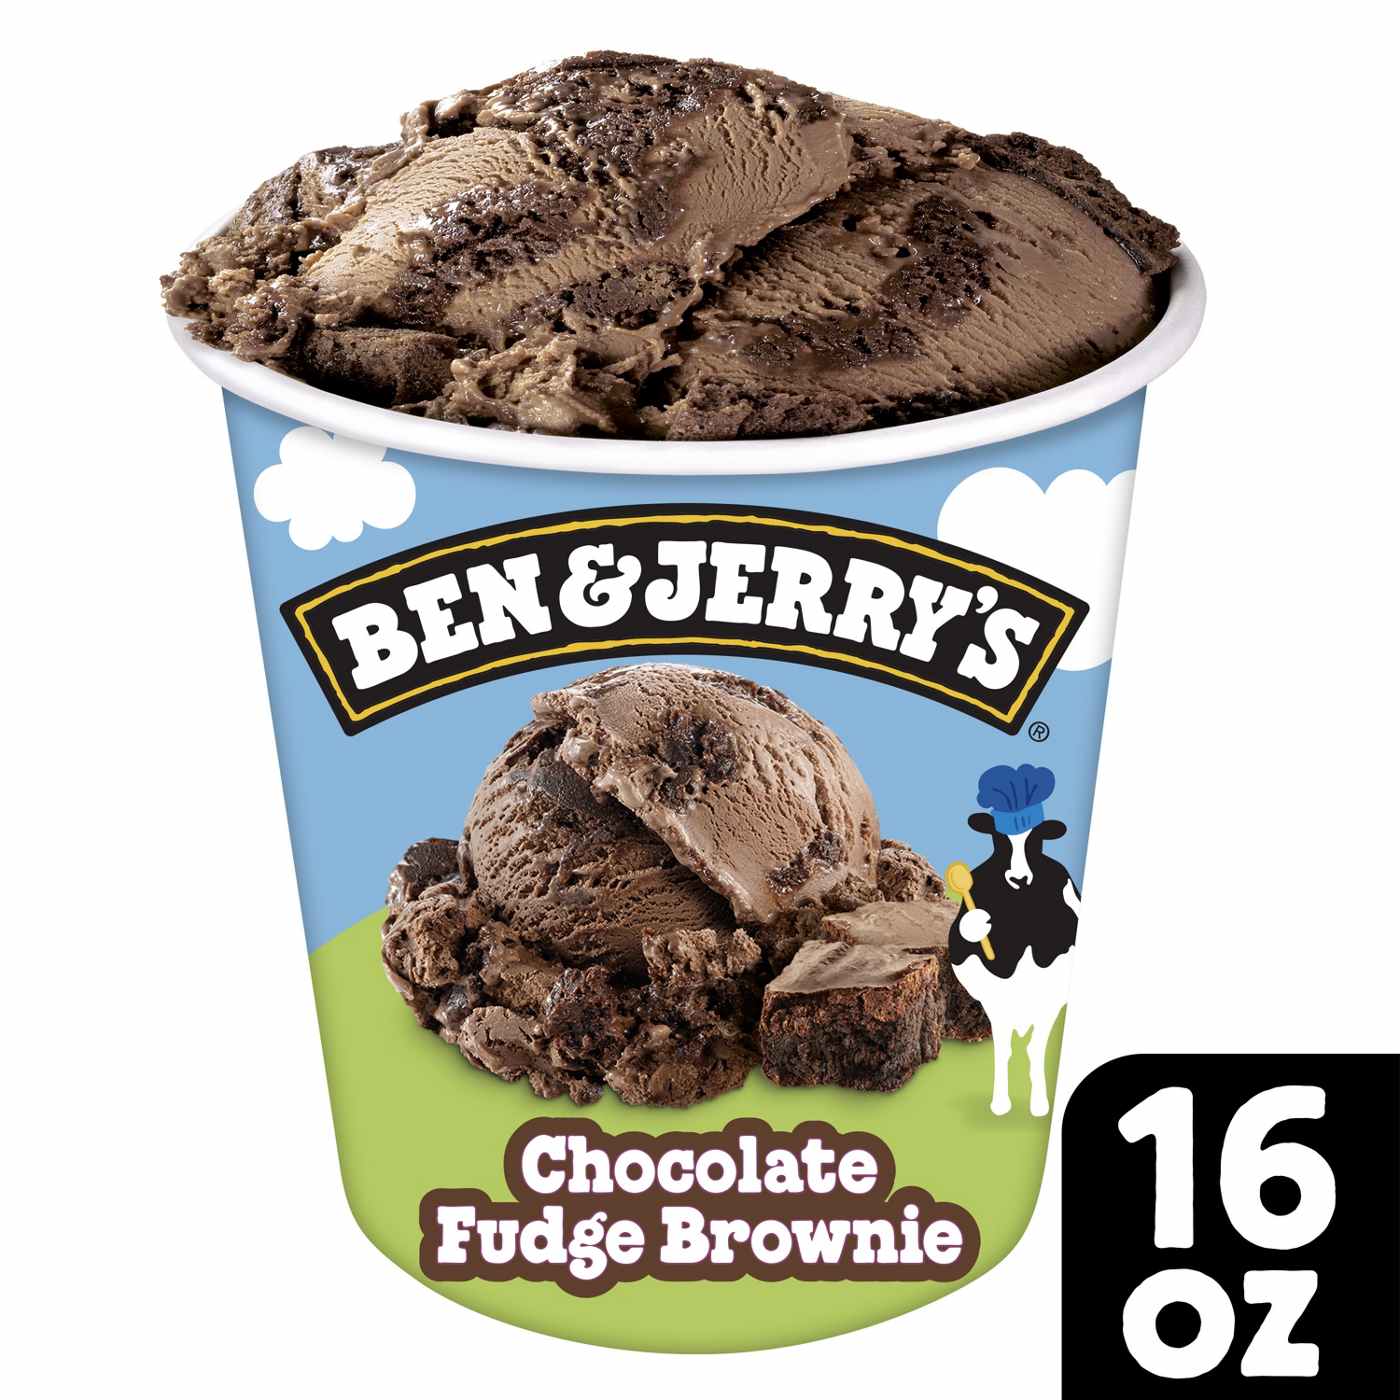 Ben & Jerry's Chocolate Fudge Brownie Ice Cream Pint; image 2 of 3